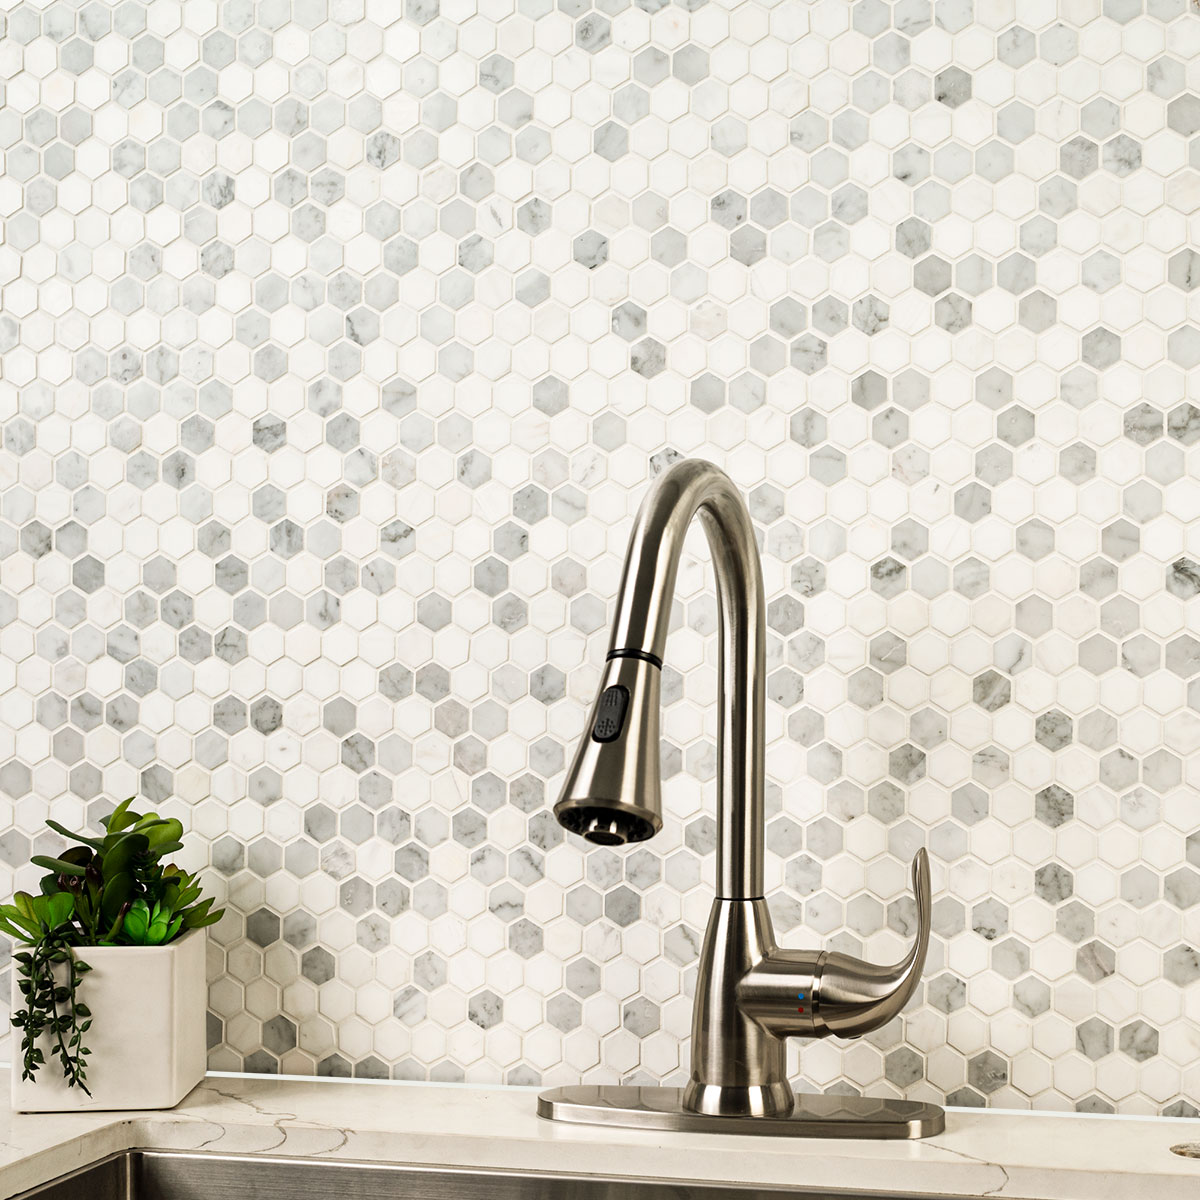 Bianco Dolomite Tibi Polished Tile wall in bathroom